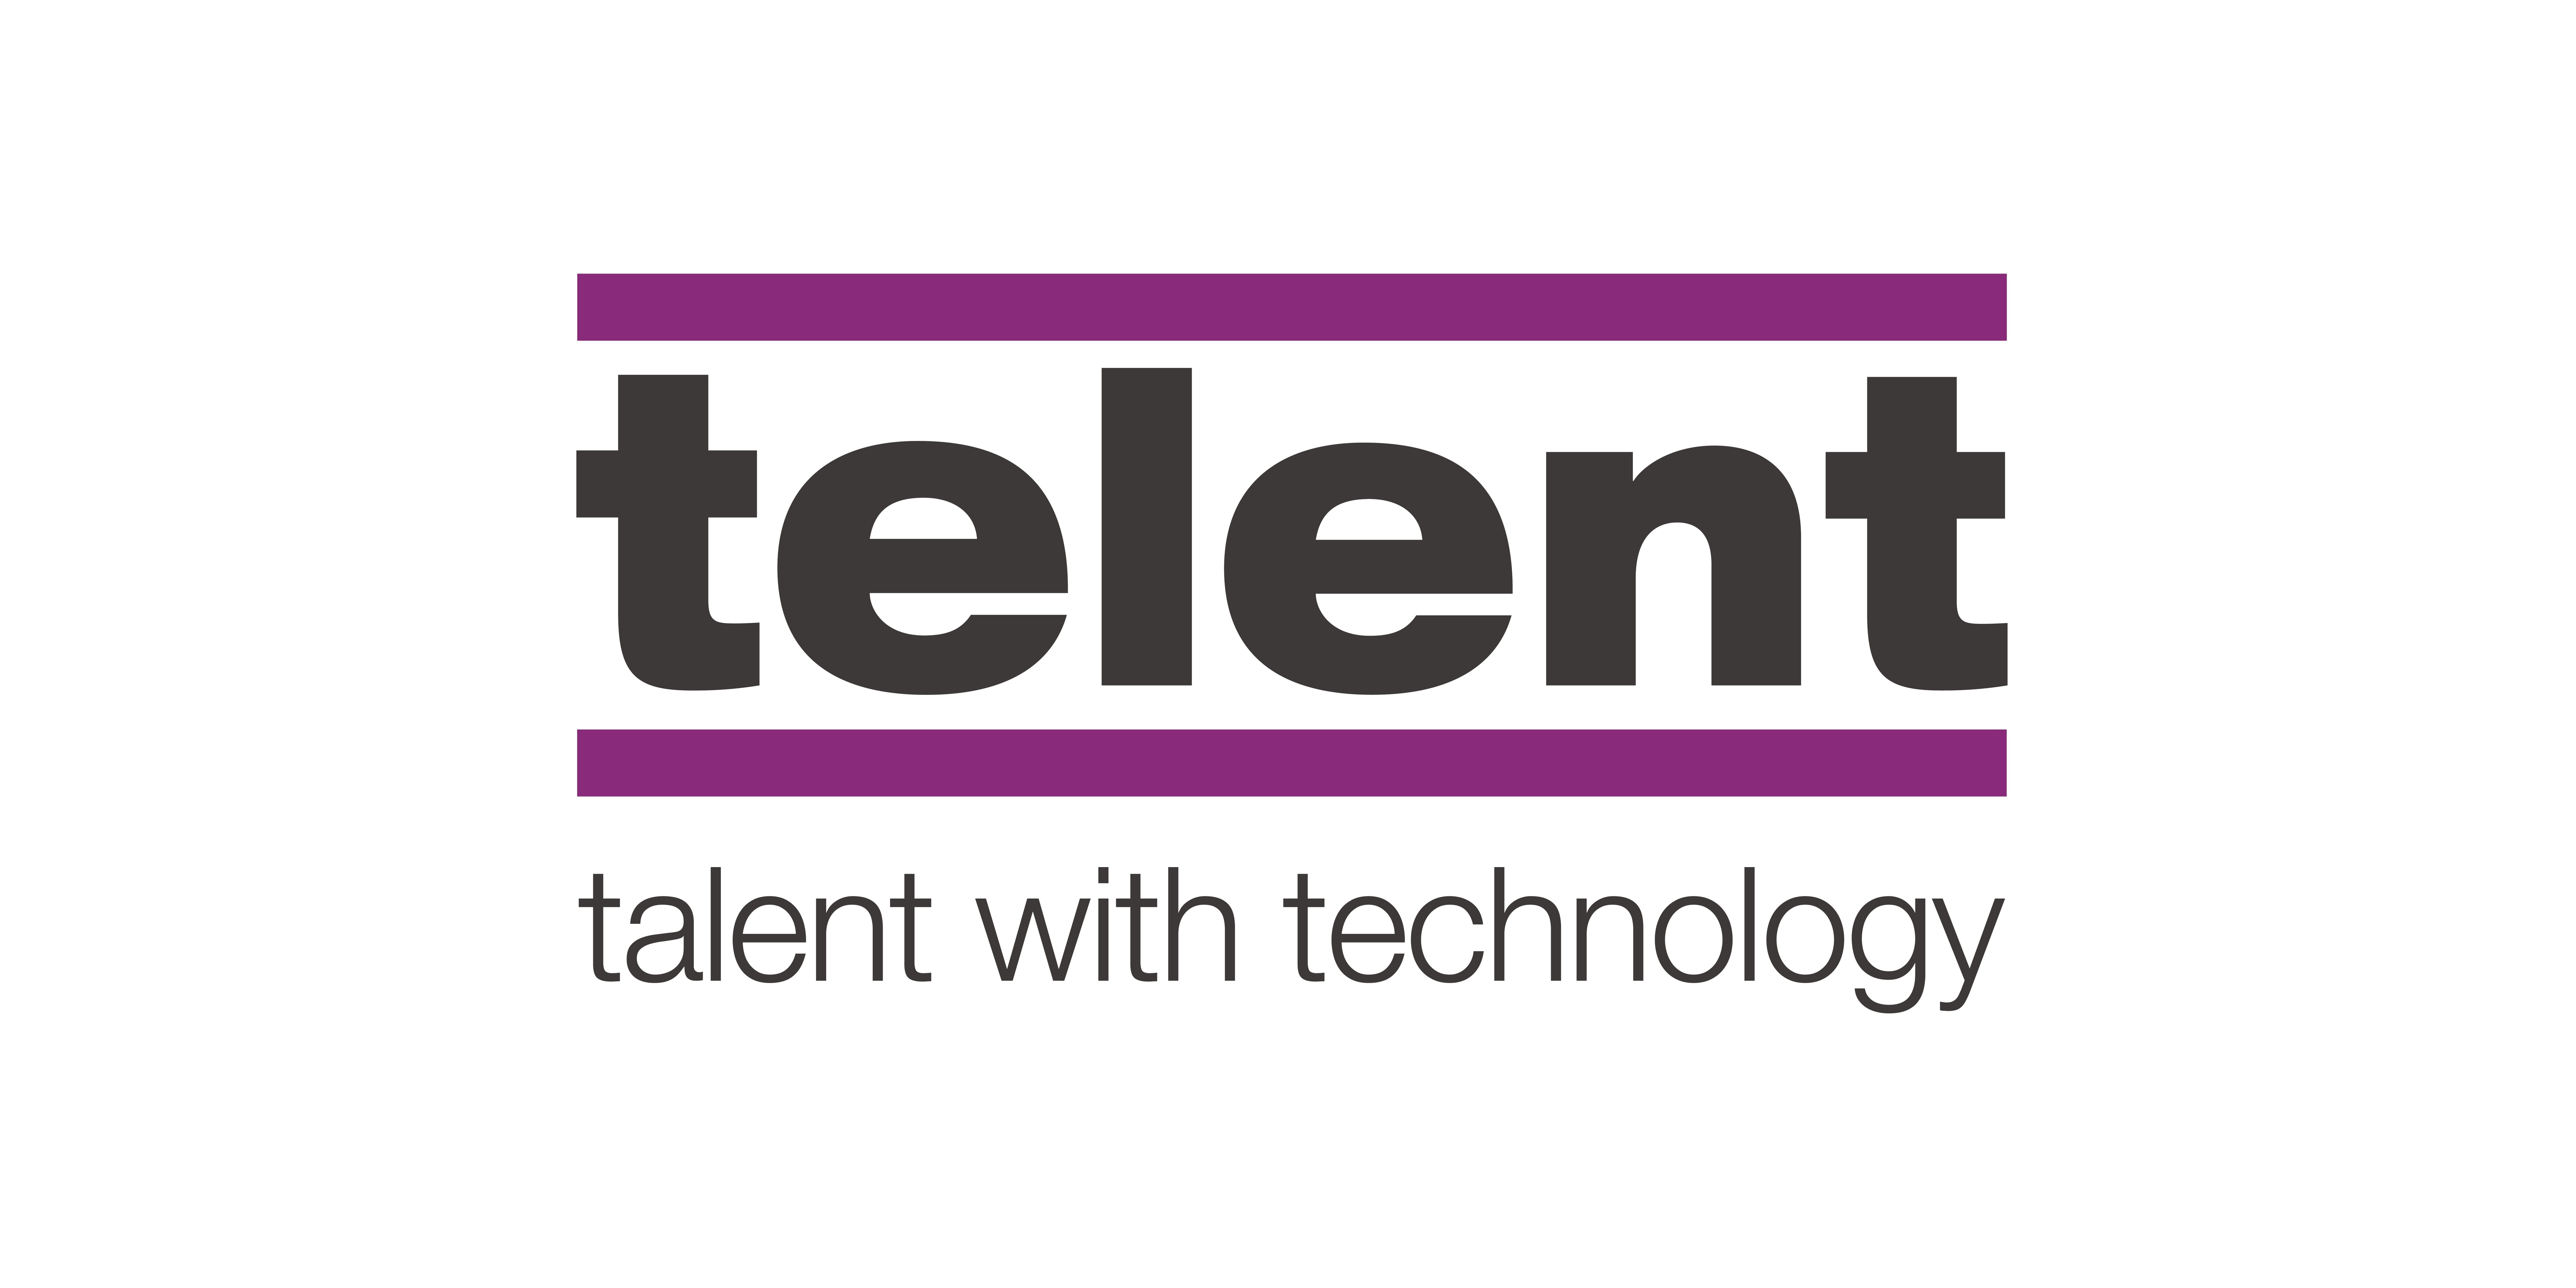 Telent Technology Services Ltd